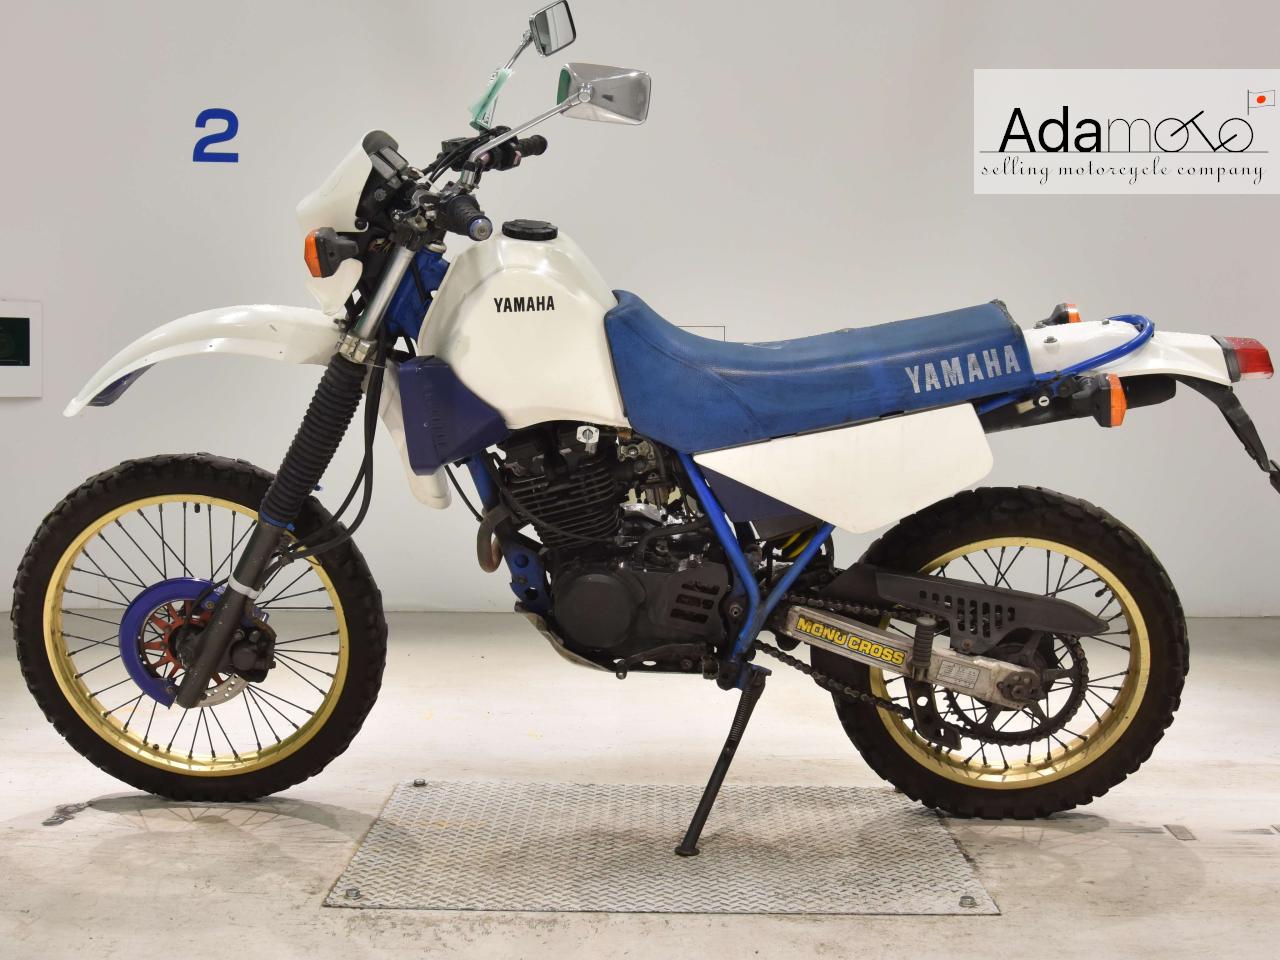 Yamaha XT250T - Adamoto - Motorcycles from Japan